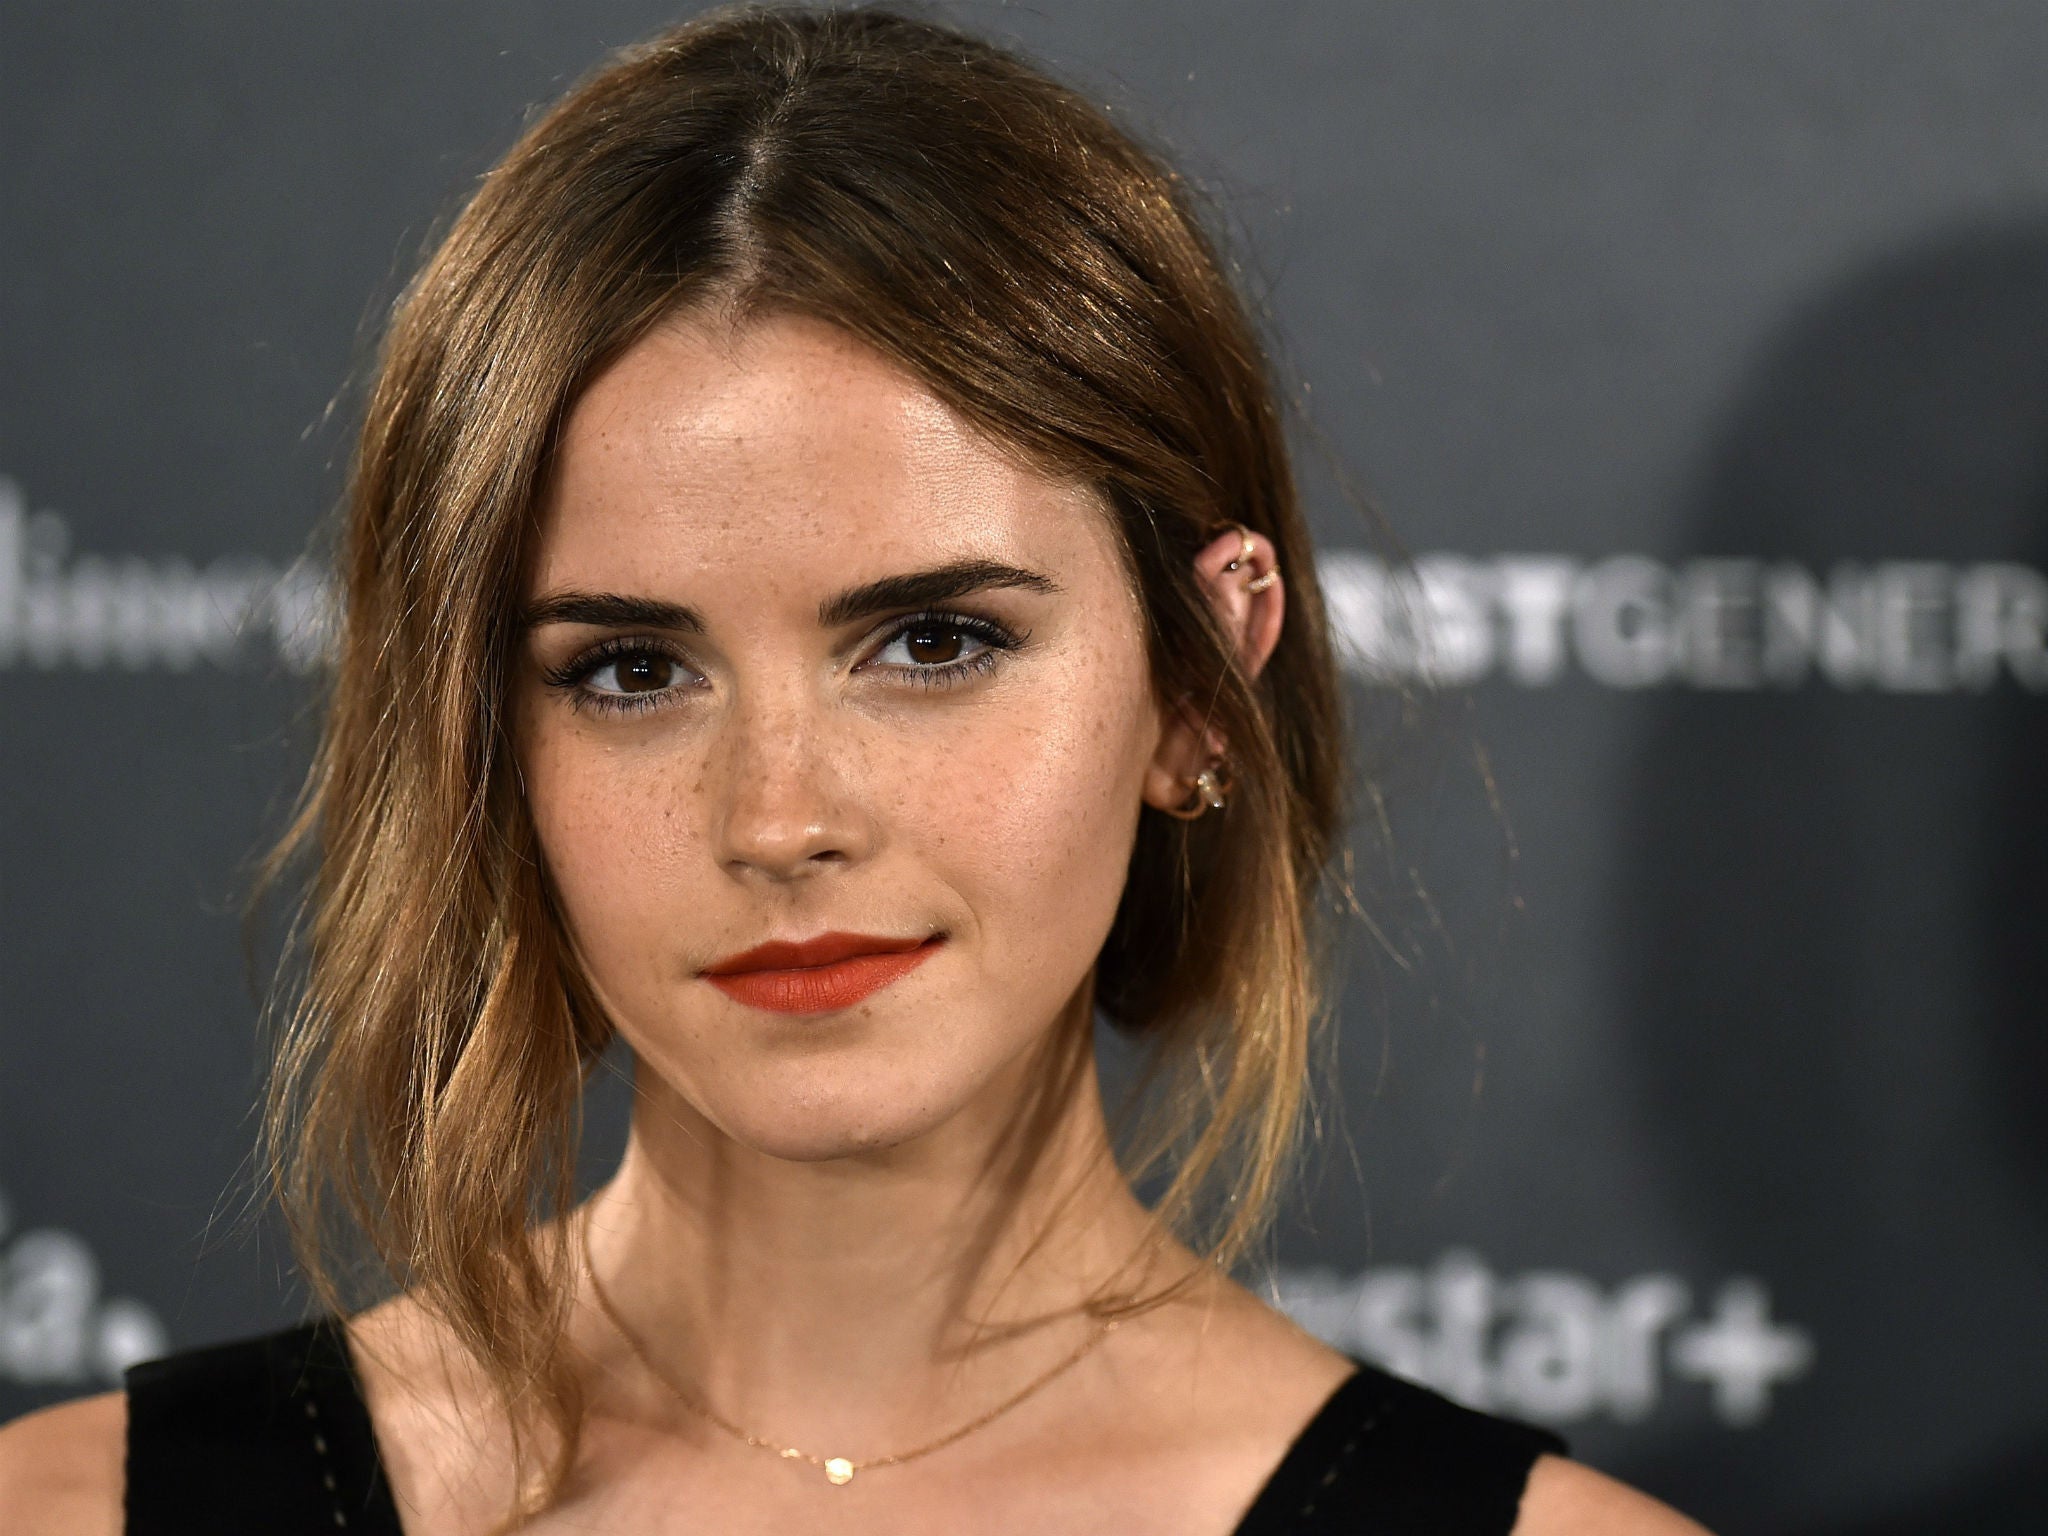 'Fashion is a feminist issue' - Emma Watson